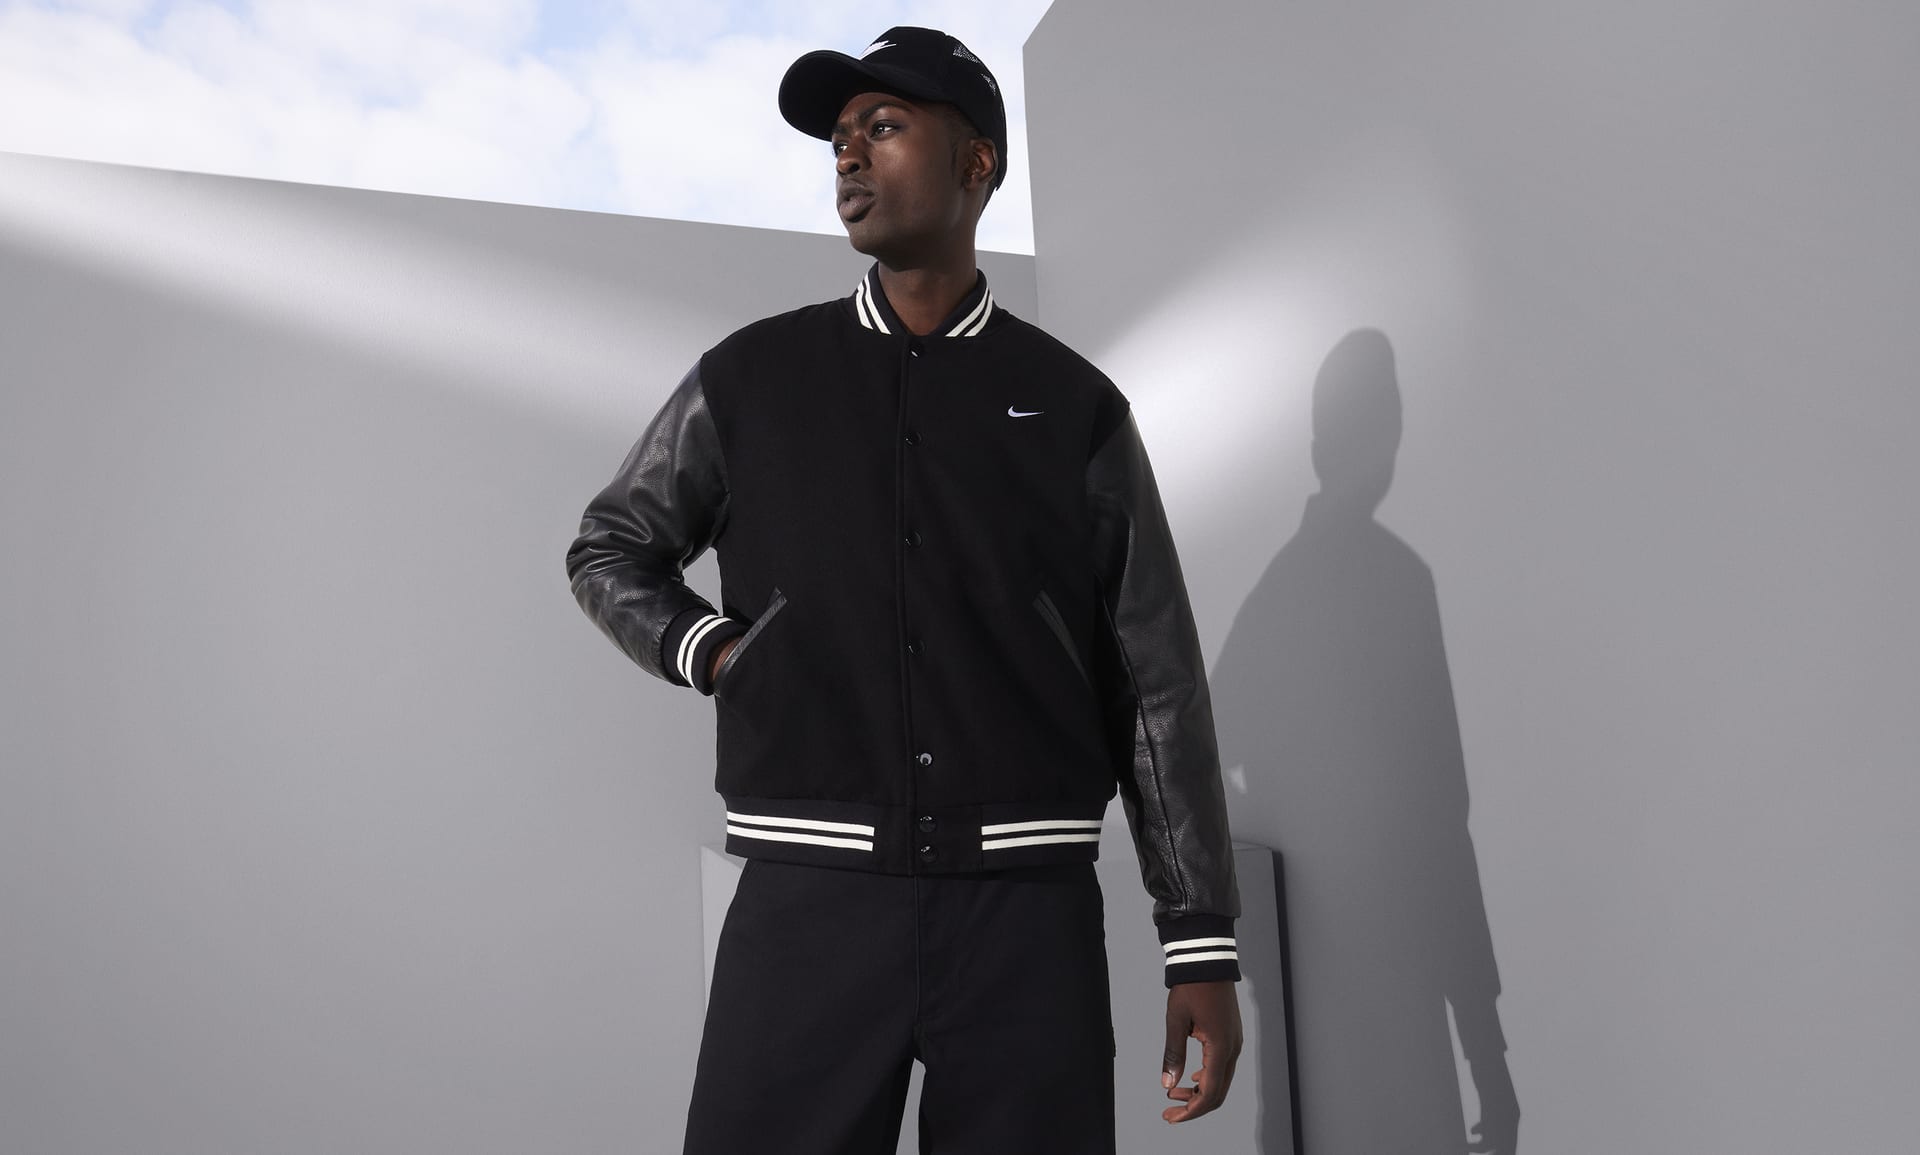 Nike Authentics Men's Varsity Jacket.